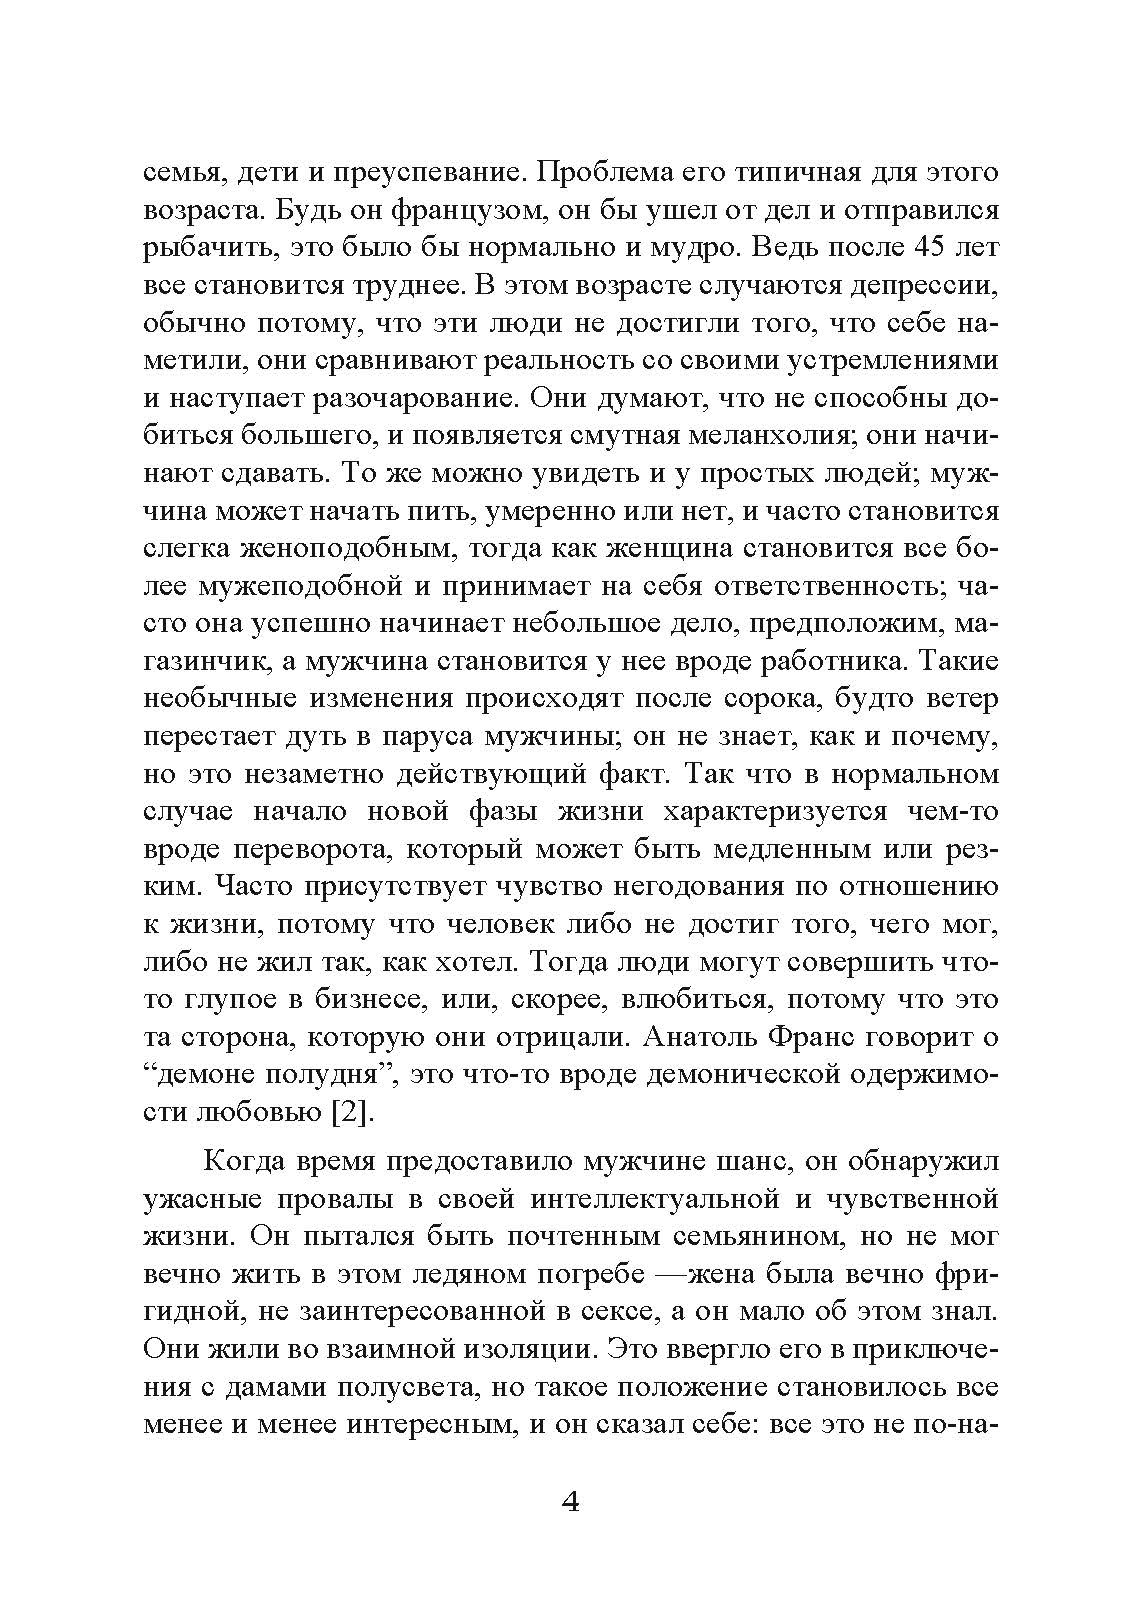 Анализ сновидений. Семинары (осень 1929 г. — лето 1930 г.). Автор — Карл Густав Юнг. 